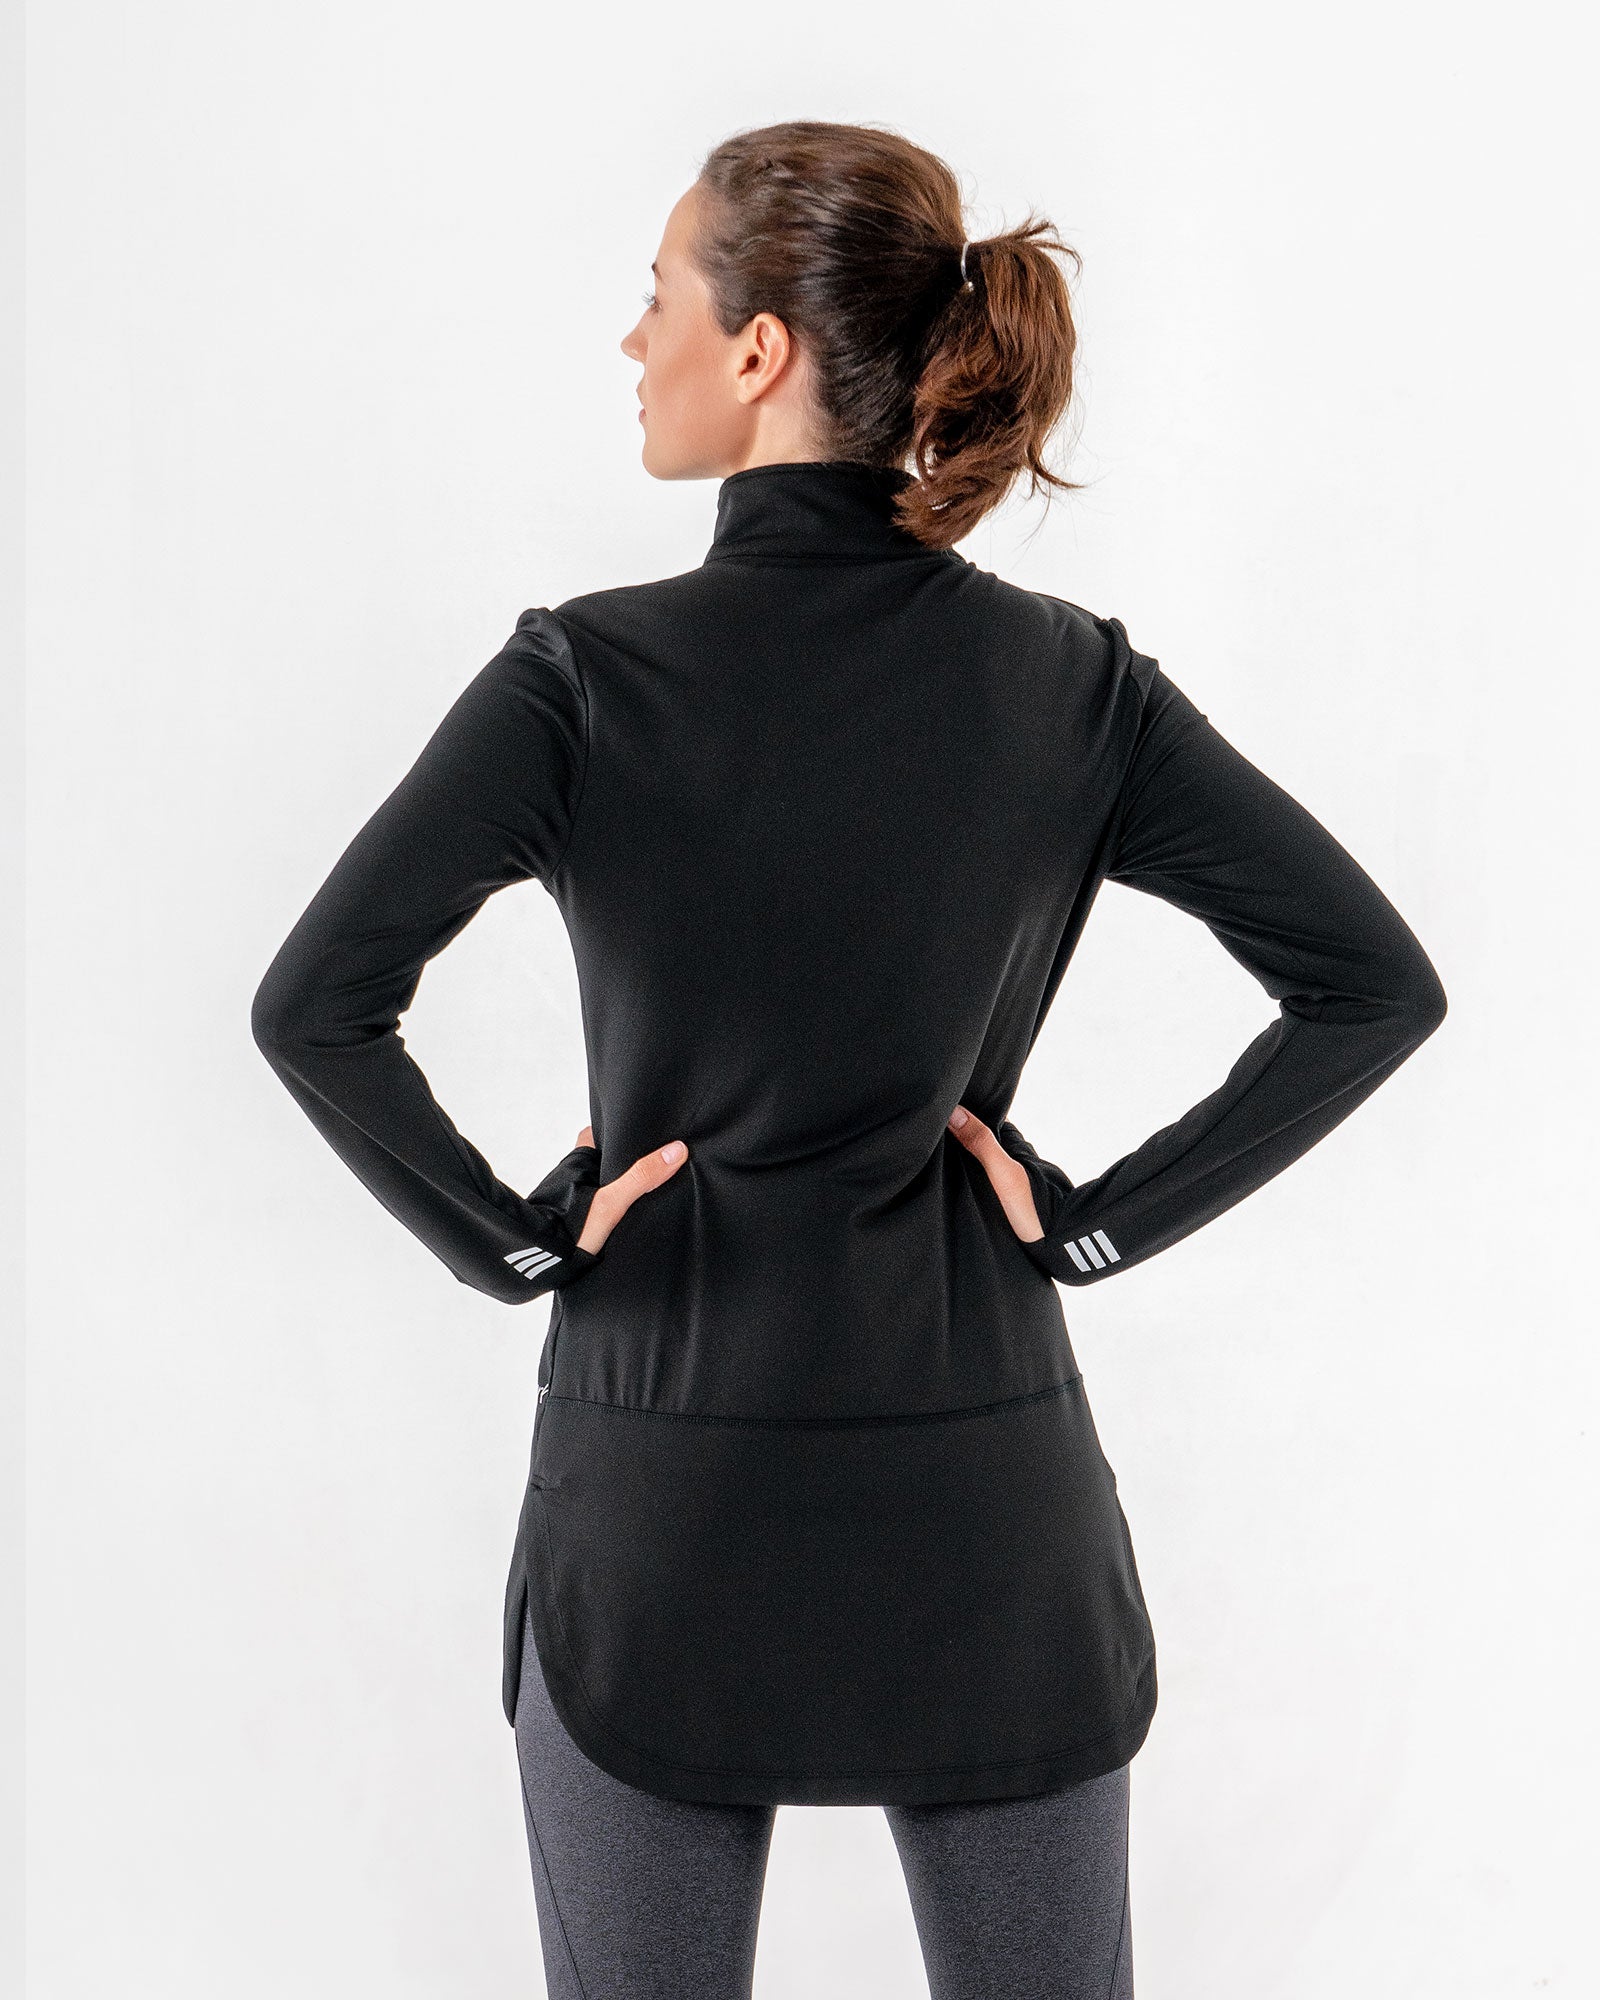 Spark Half-Zip in black by Veil Garments. Modest activewear collection.